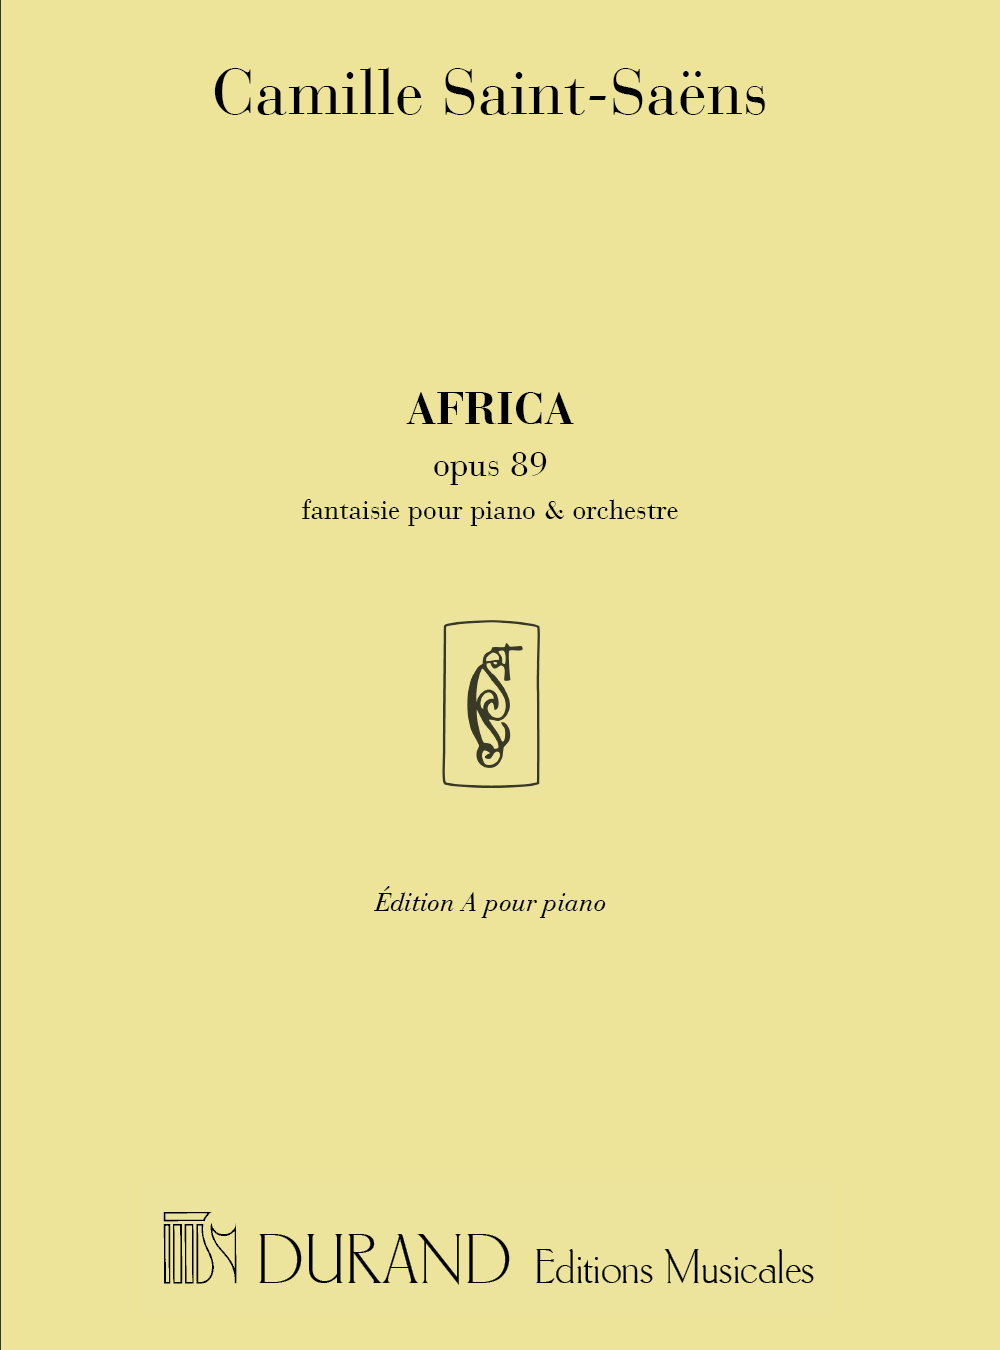 Camille Saint-Saëns: Africa opus 89 fantaisie (edition A): Piano Solo: